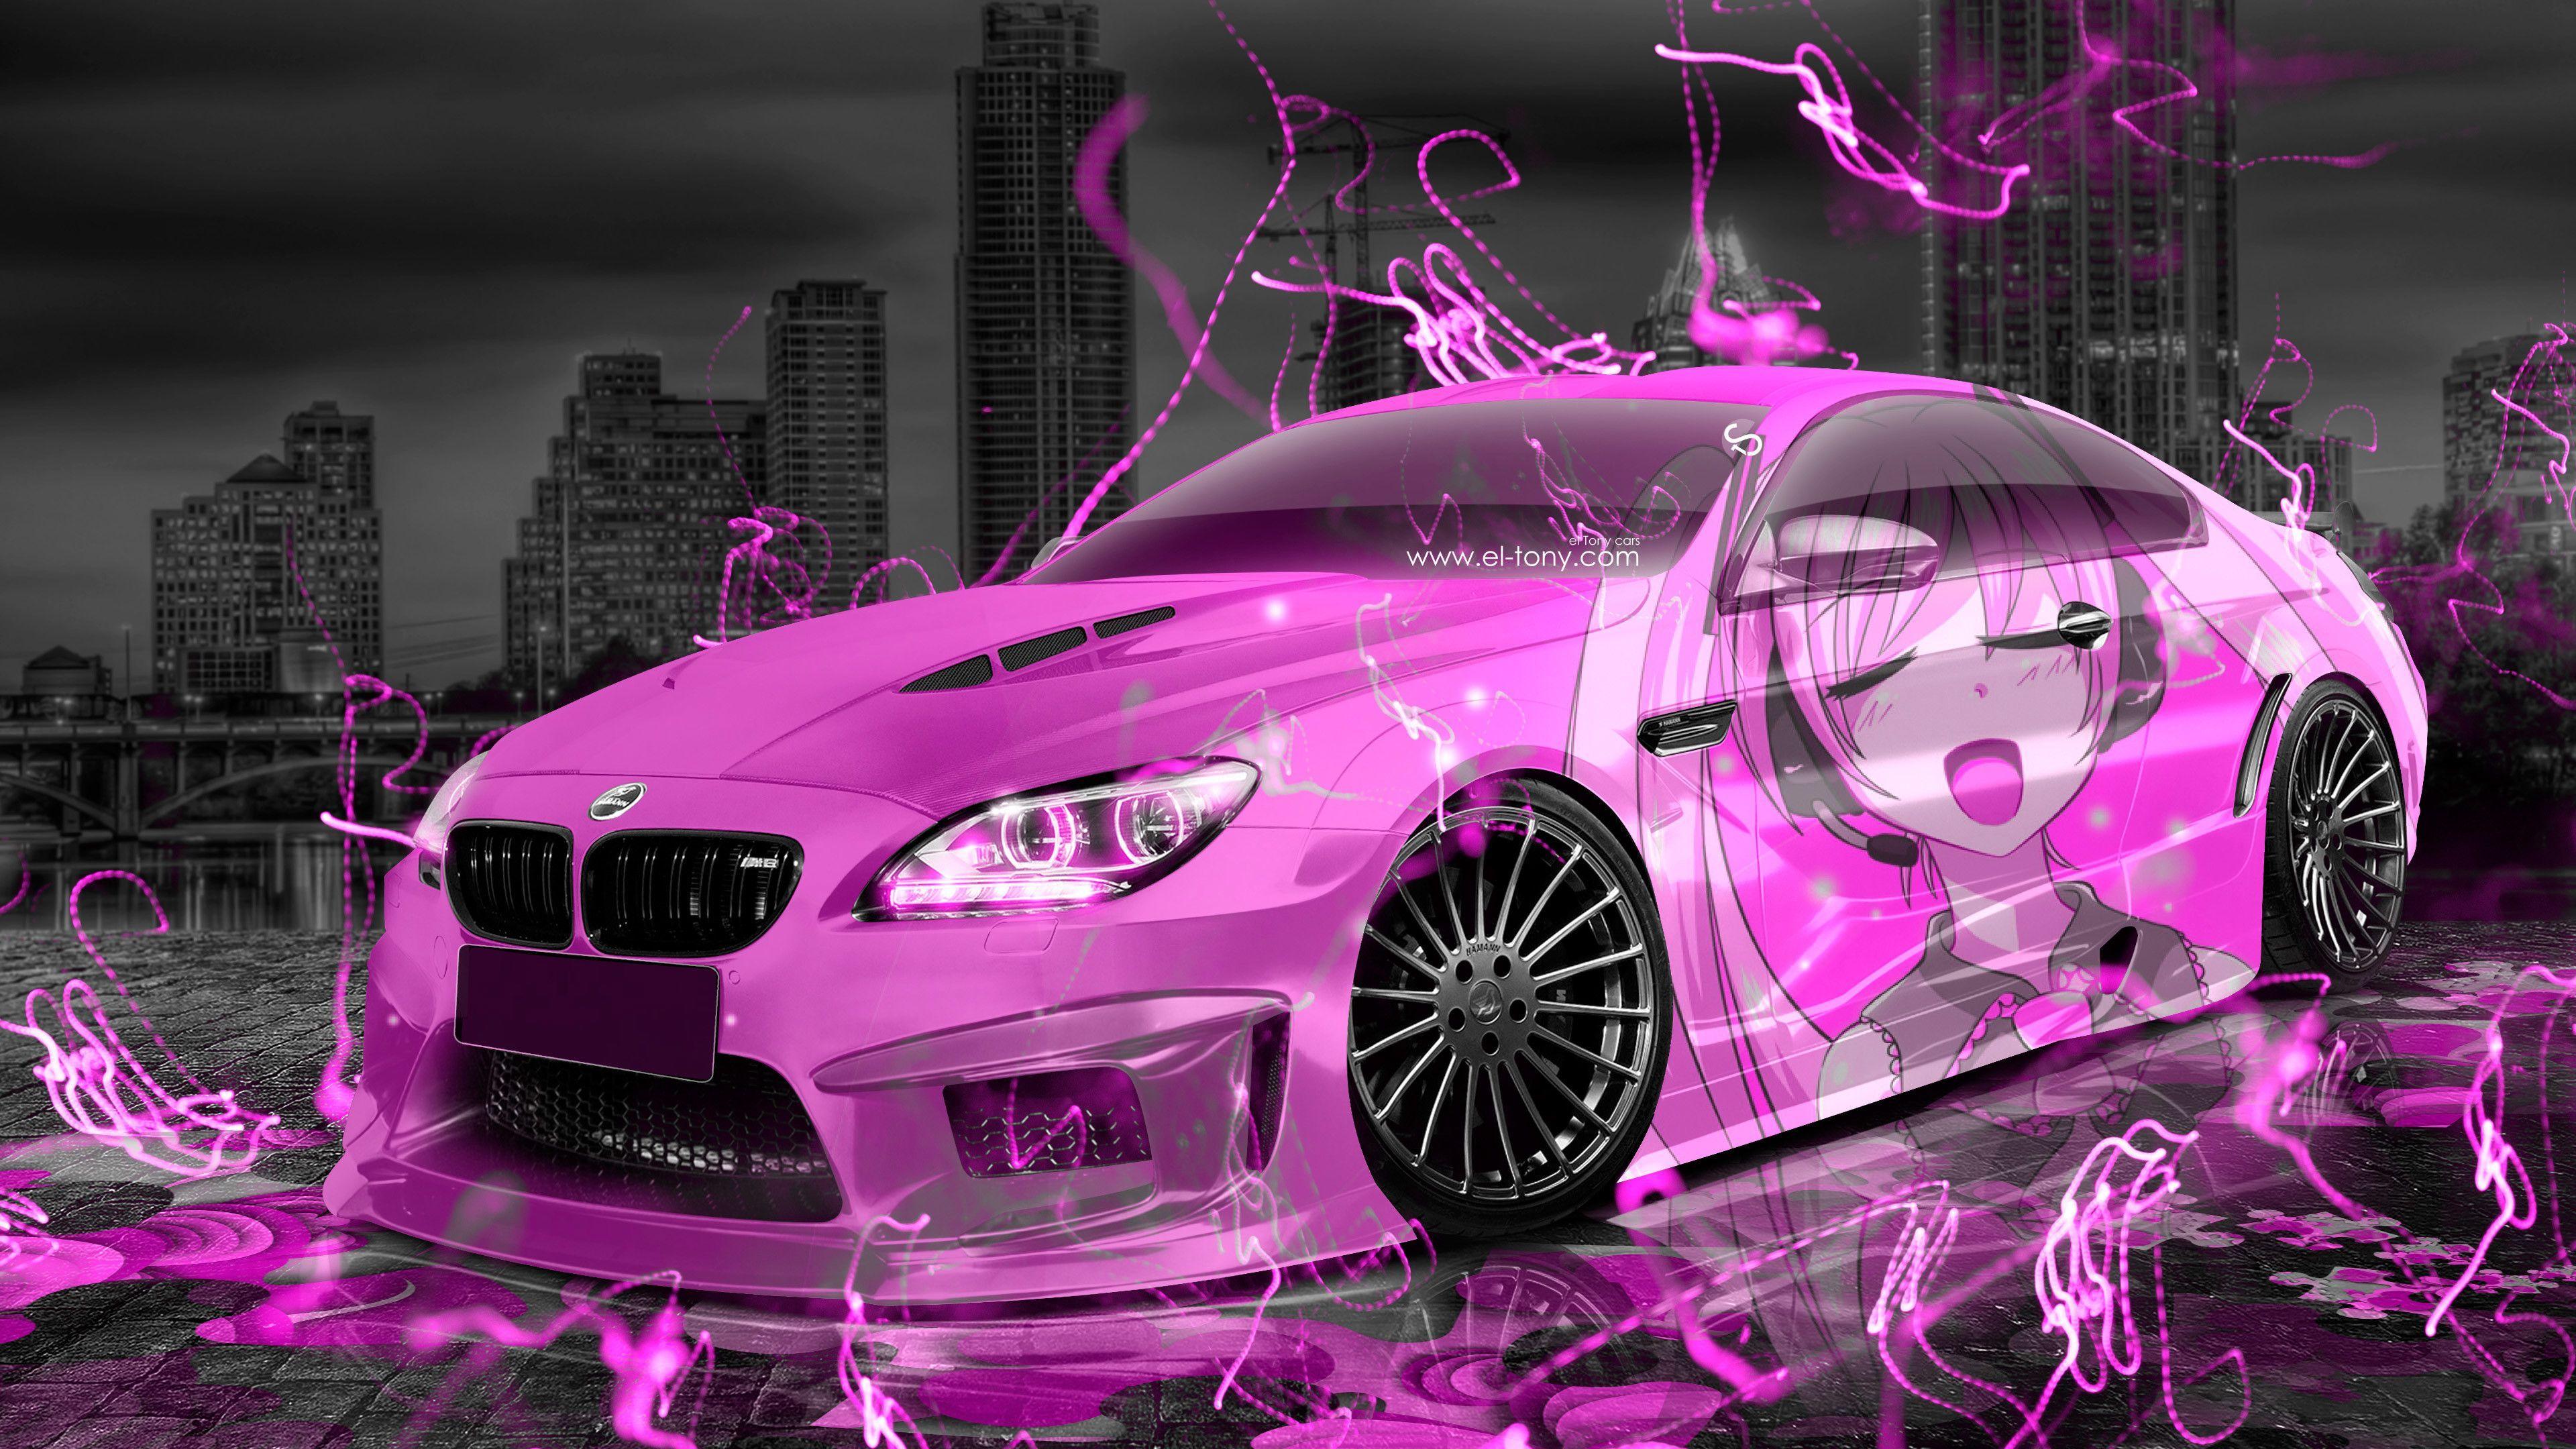 Download wallpaper 938x1668 lexus pink blur rear view sport car iphone  876s6 for parallax hd background